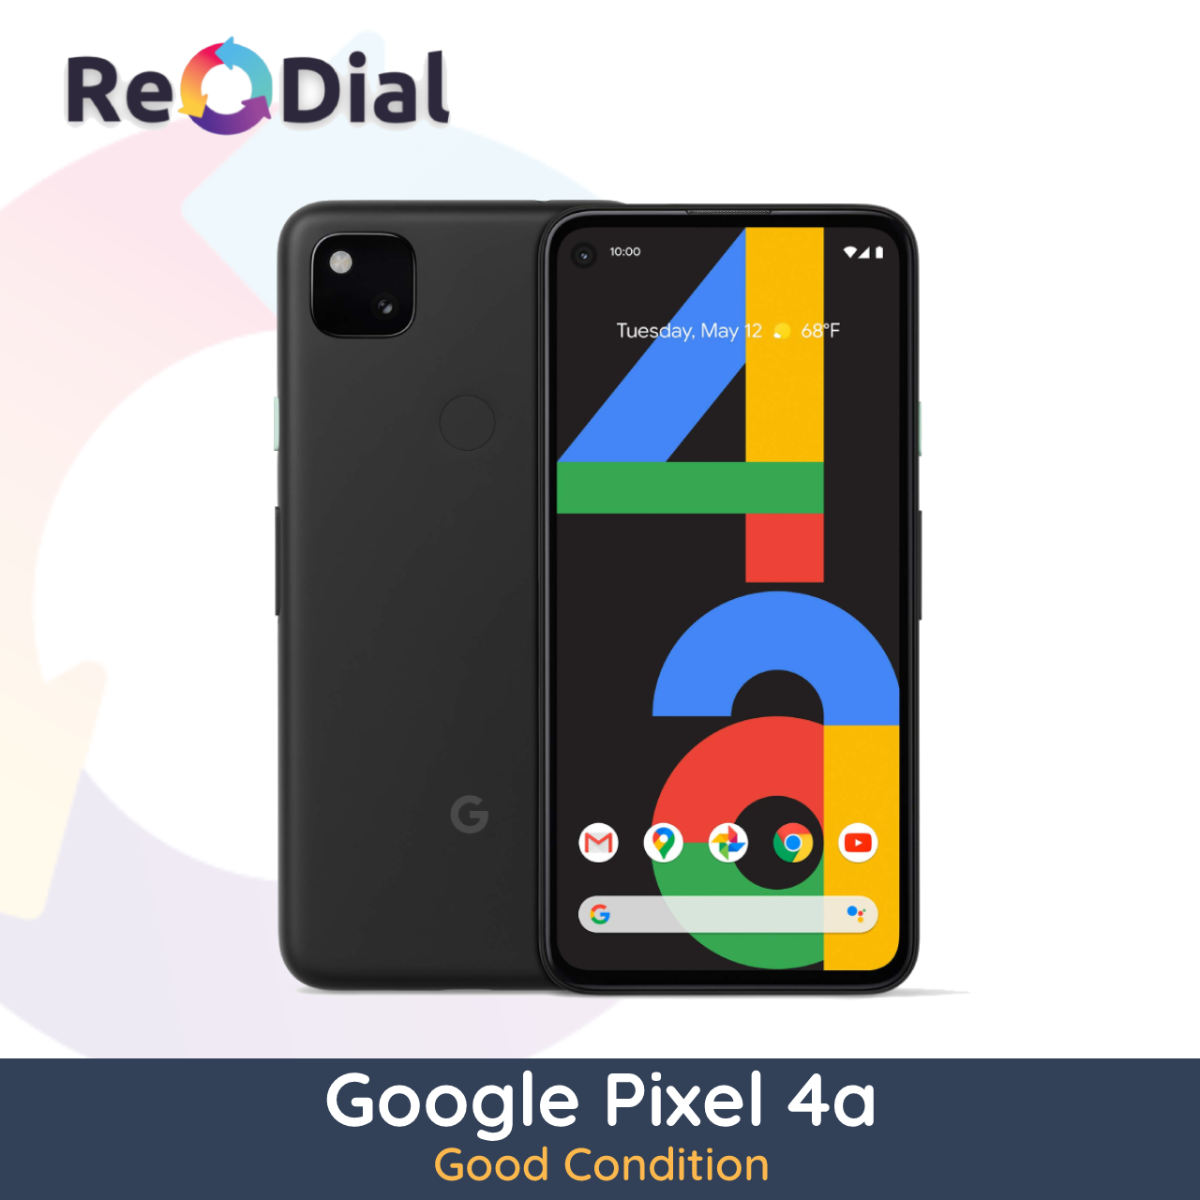 Google Pixel 4a - Good Condition